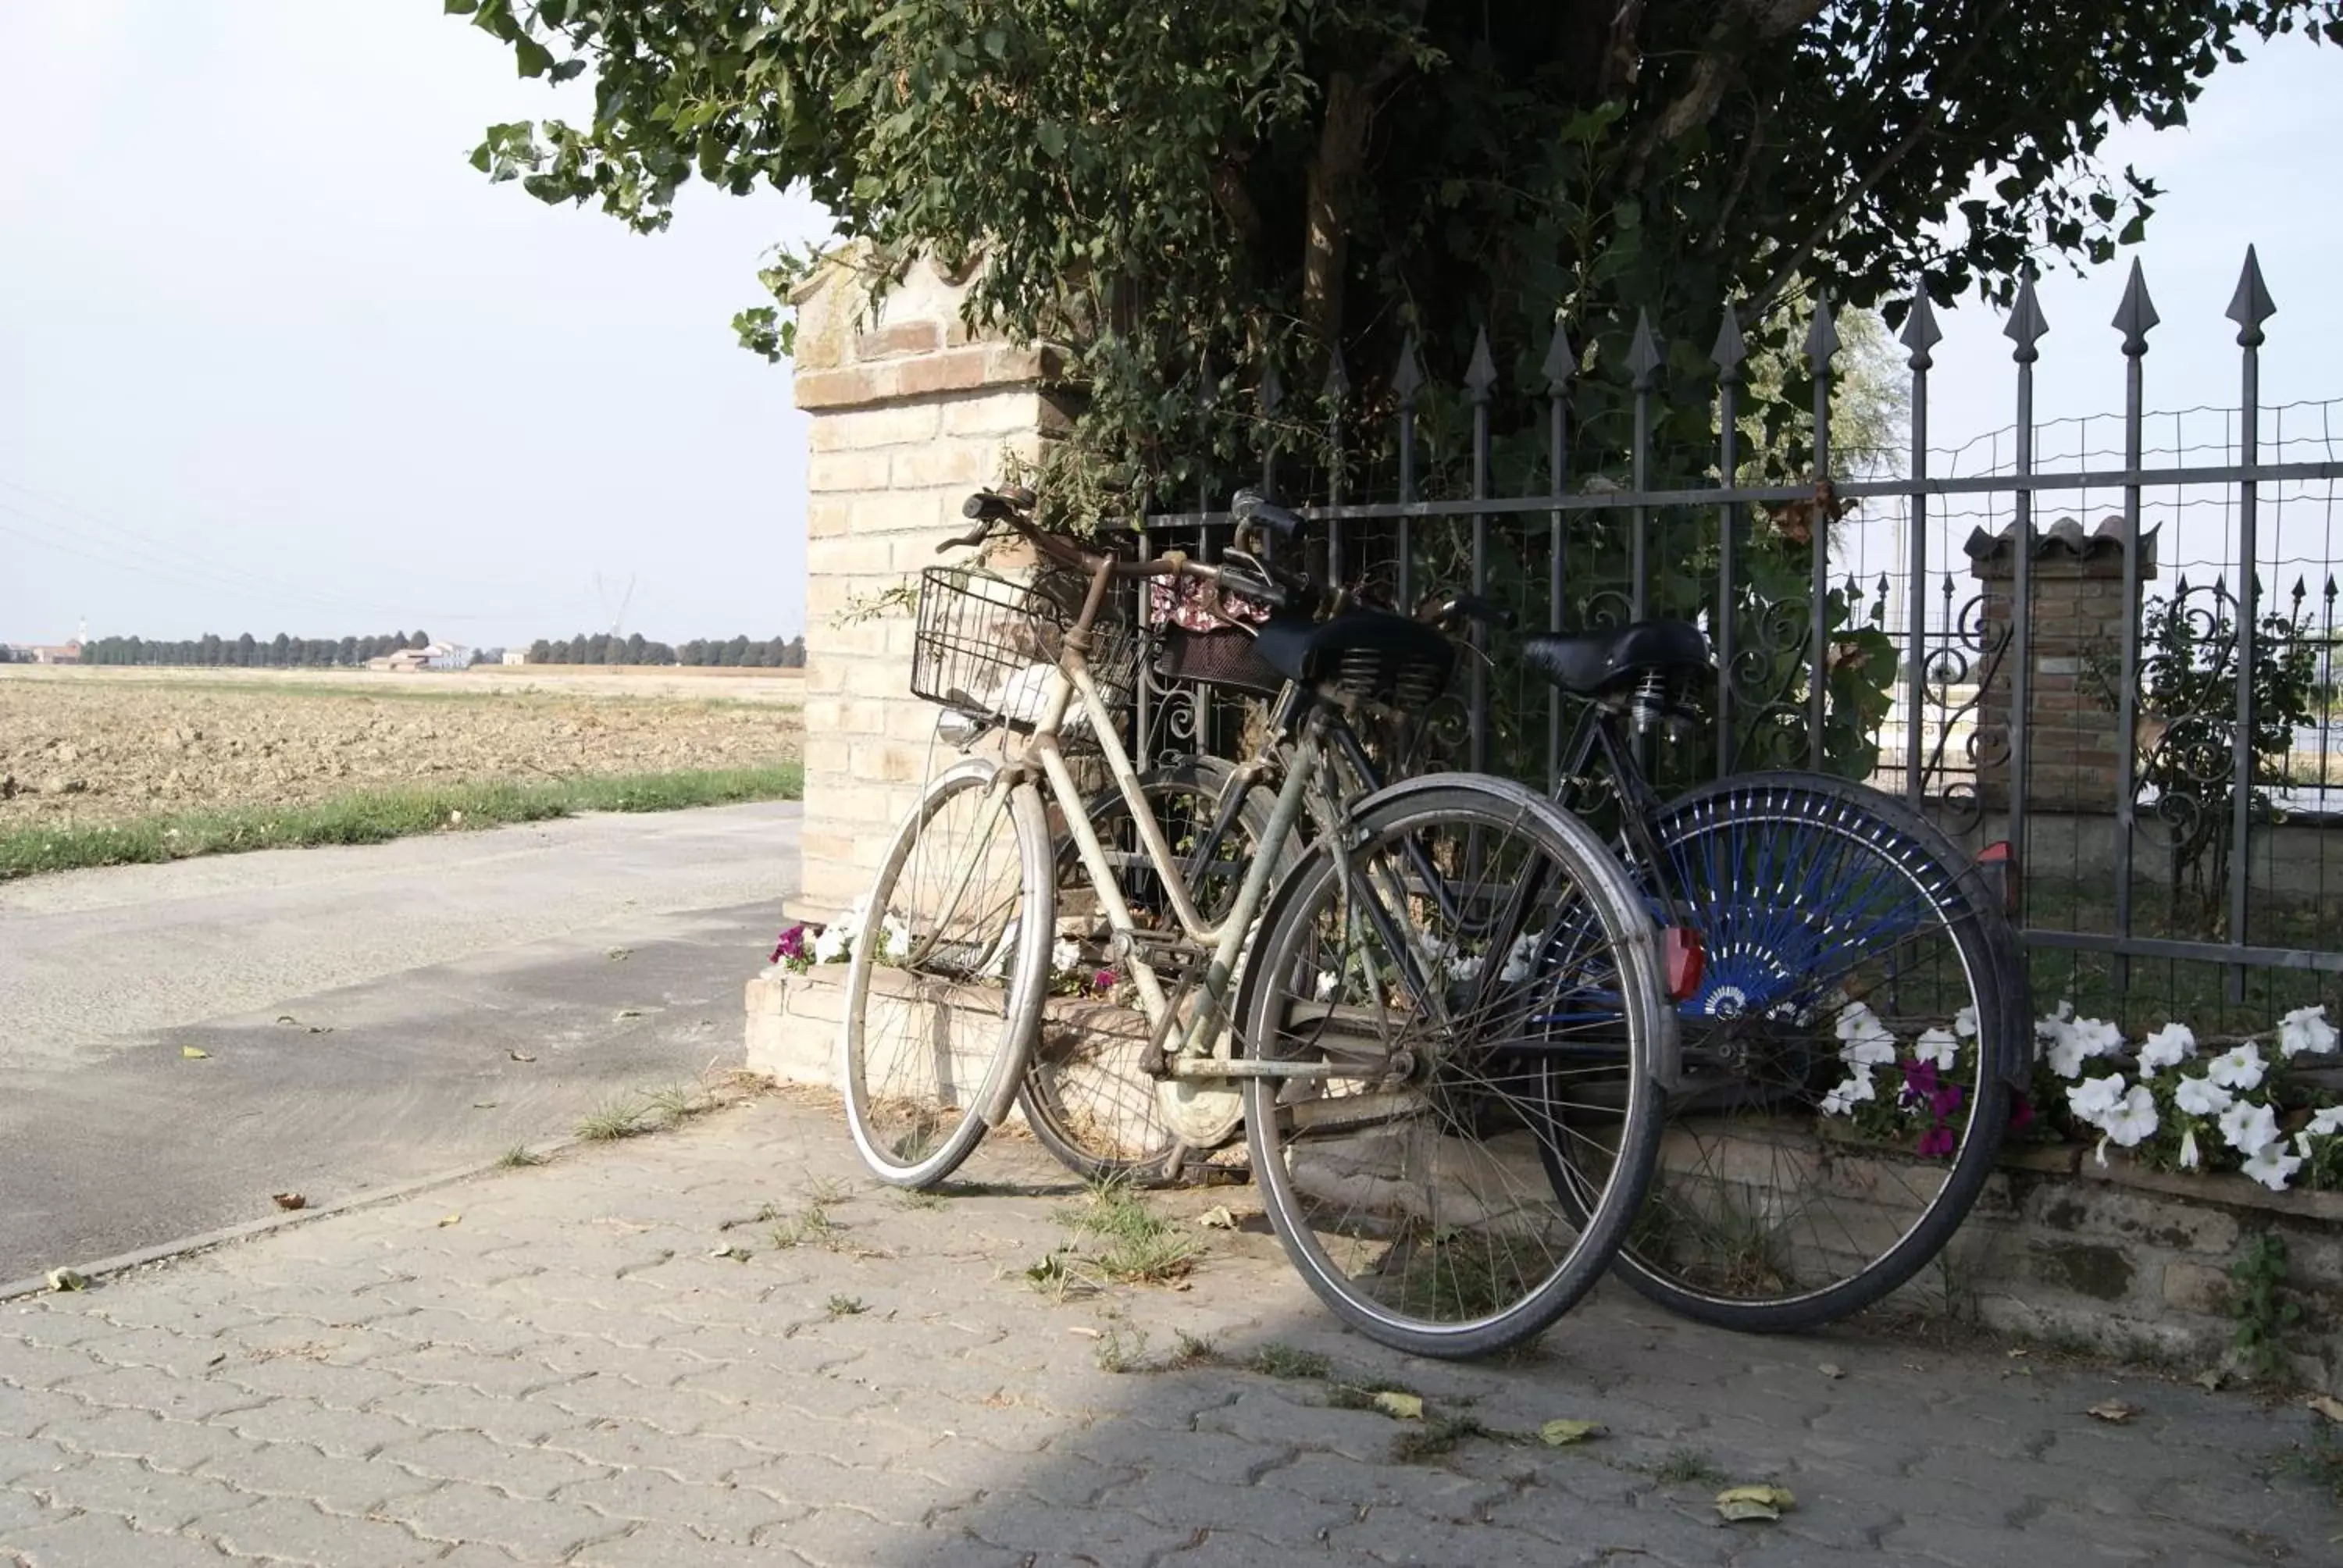 Cycling, Biking in Antico Pioppo